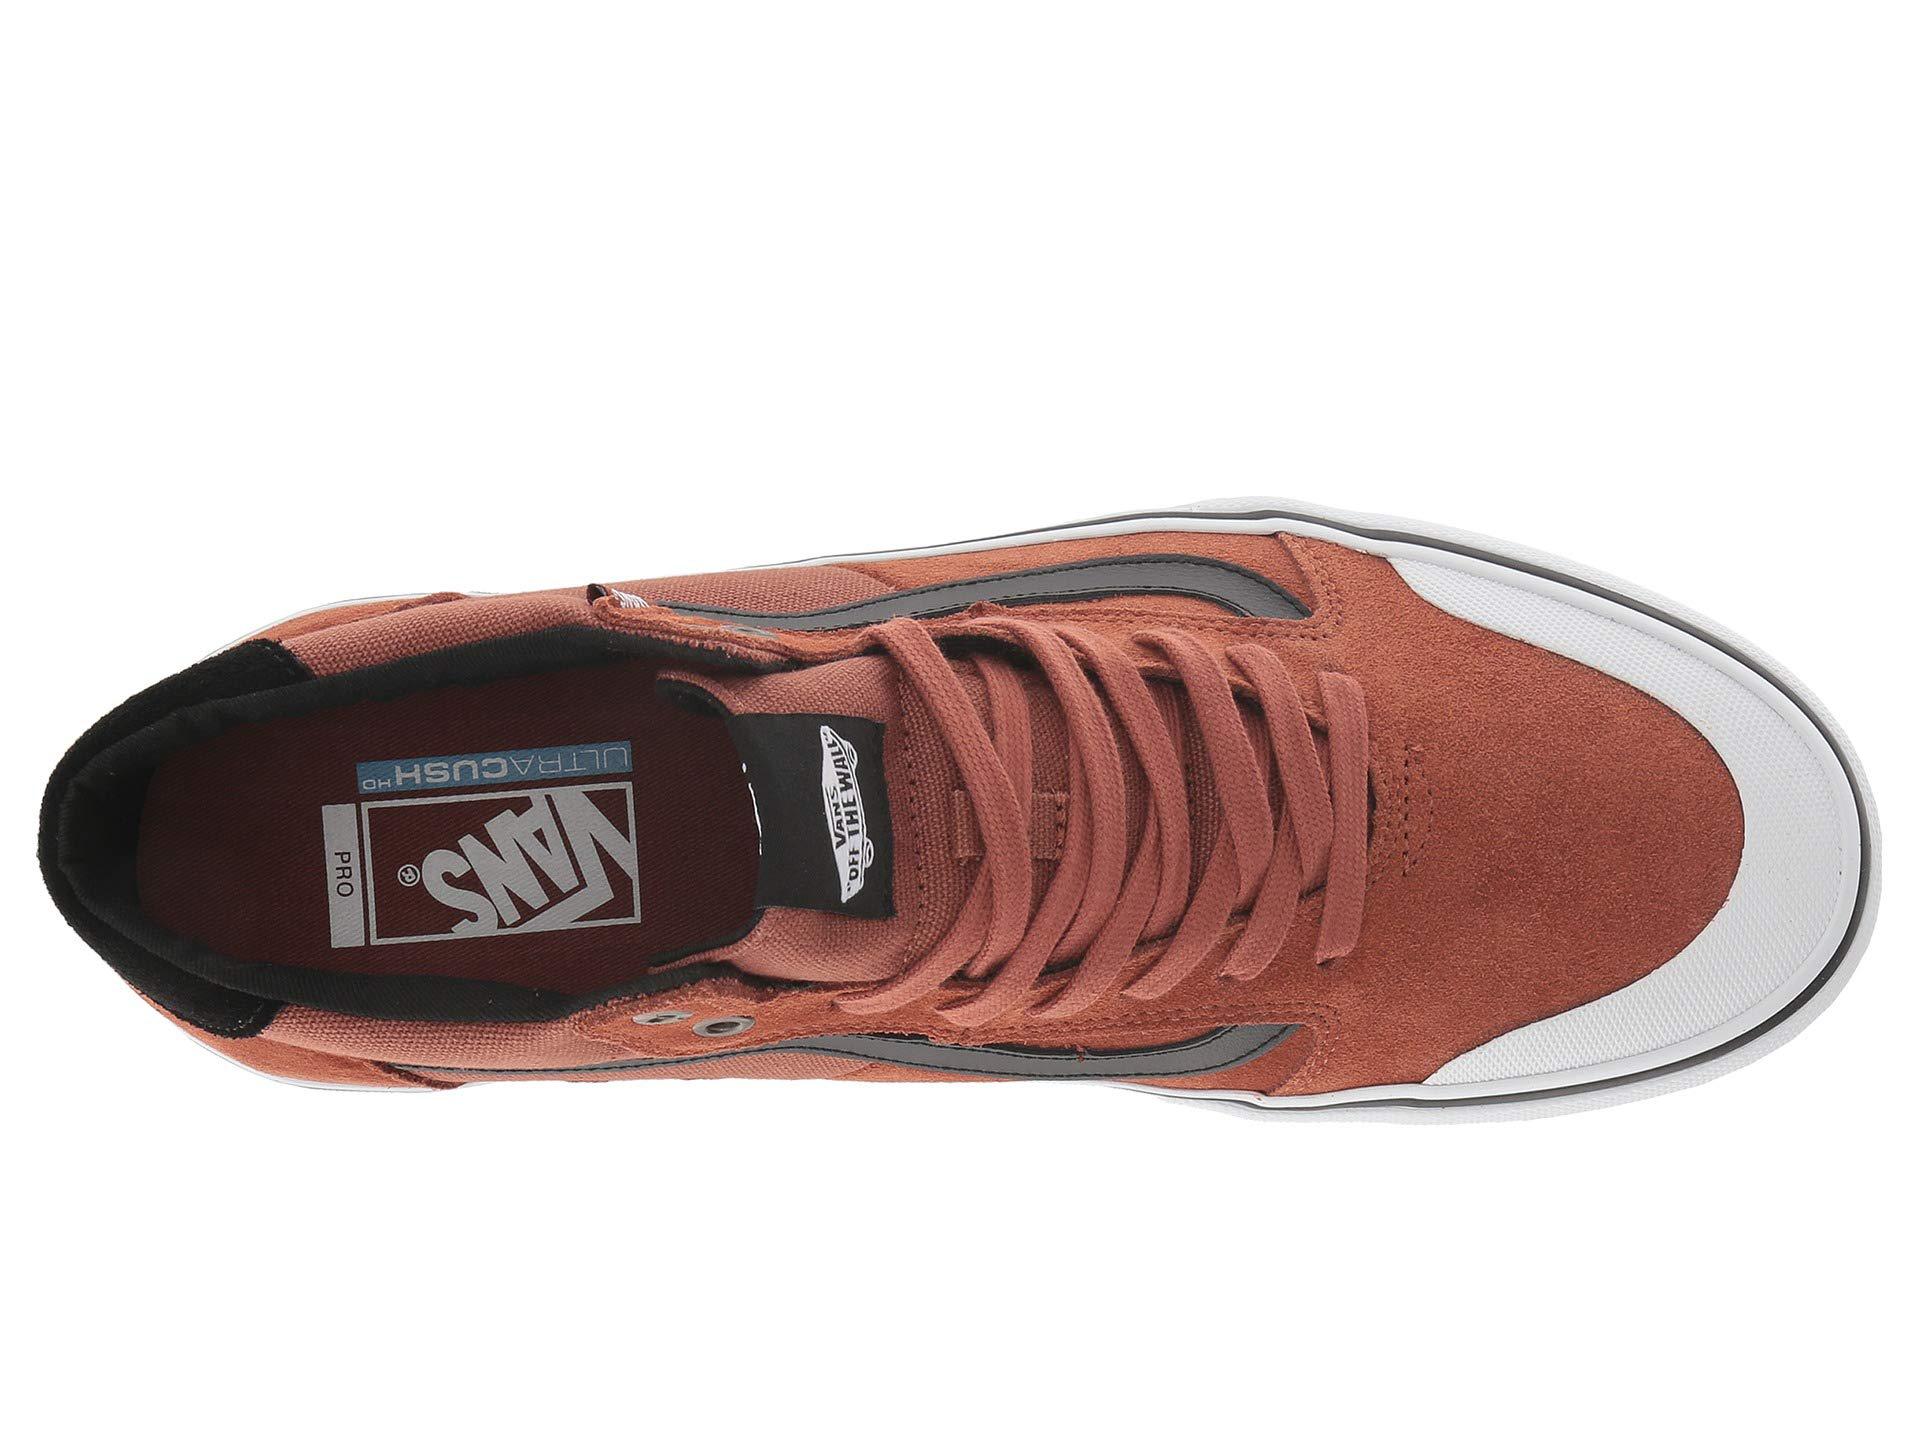 Vans Suede Style 112 Mid Pro Men's Skate Shoes for - Lyst